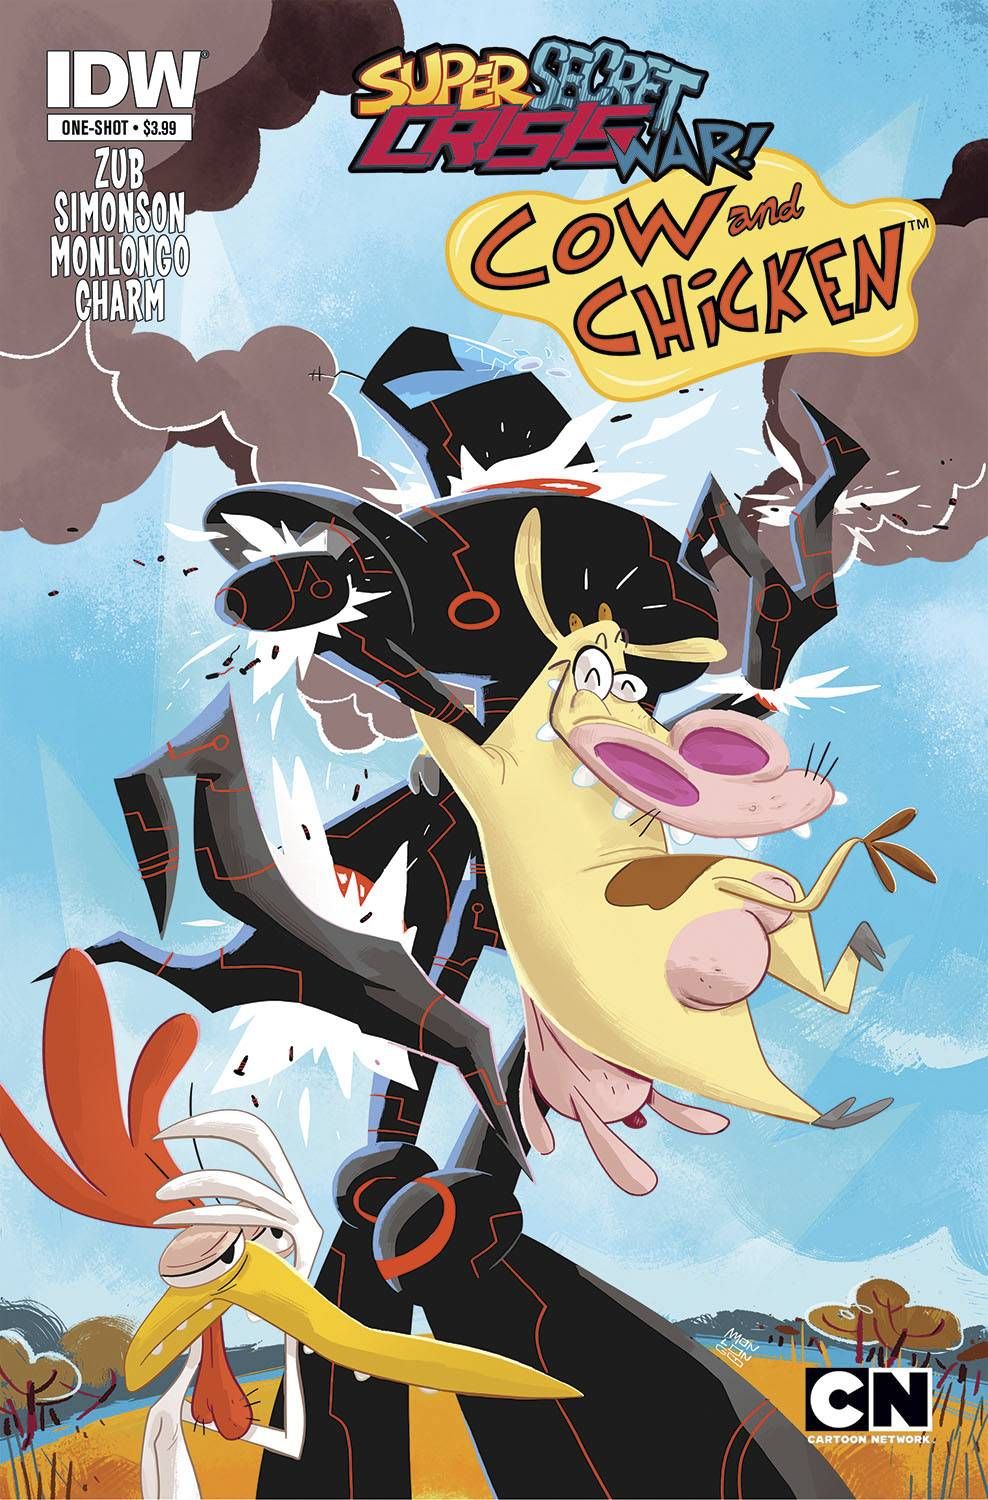 Super Secret Crisis War Cow & Chicken Comic